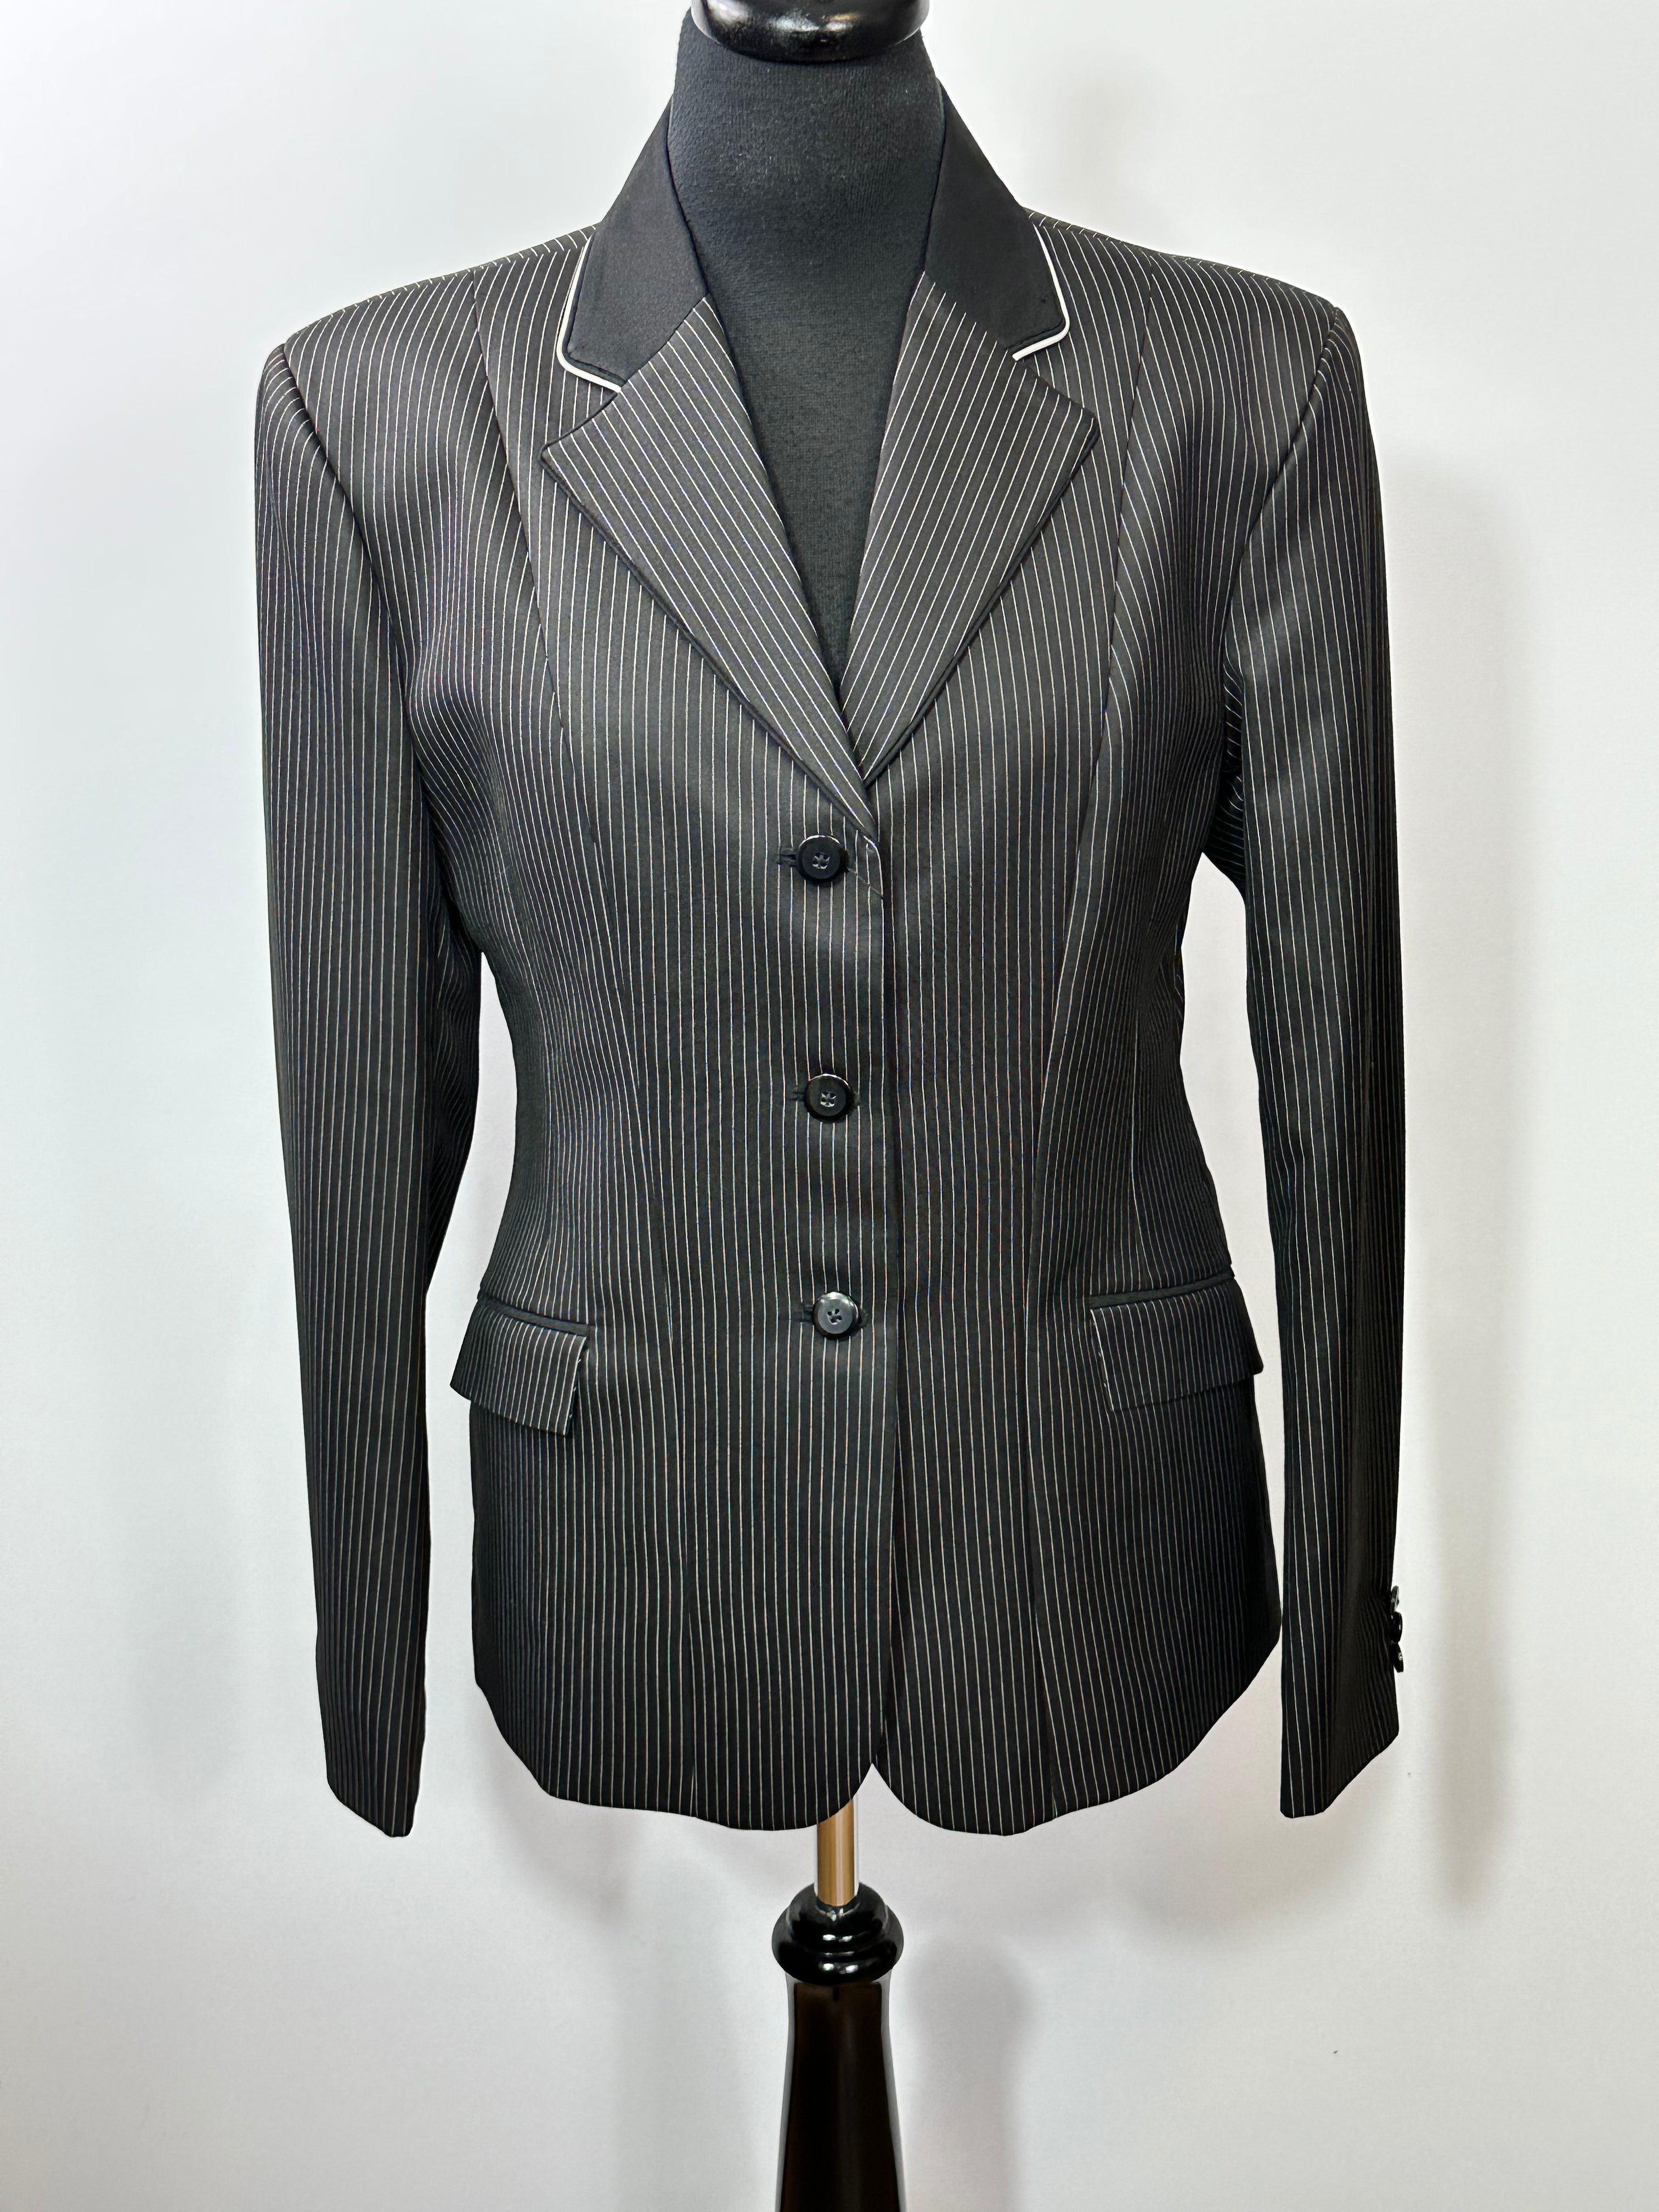 English Show Coat Black Stripe Fabric Code R216